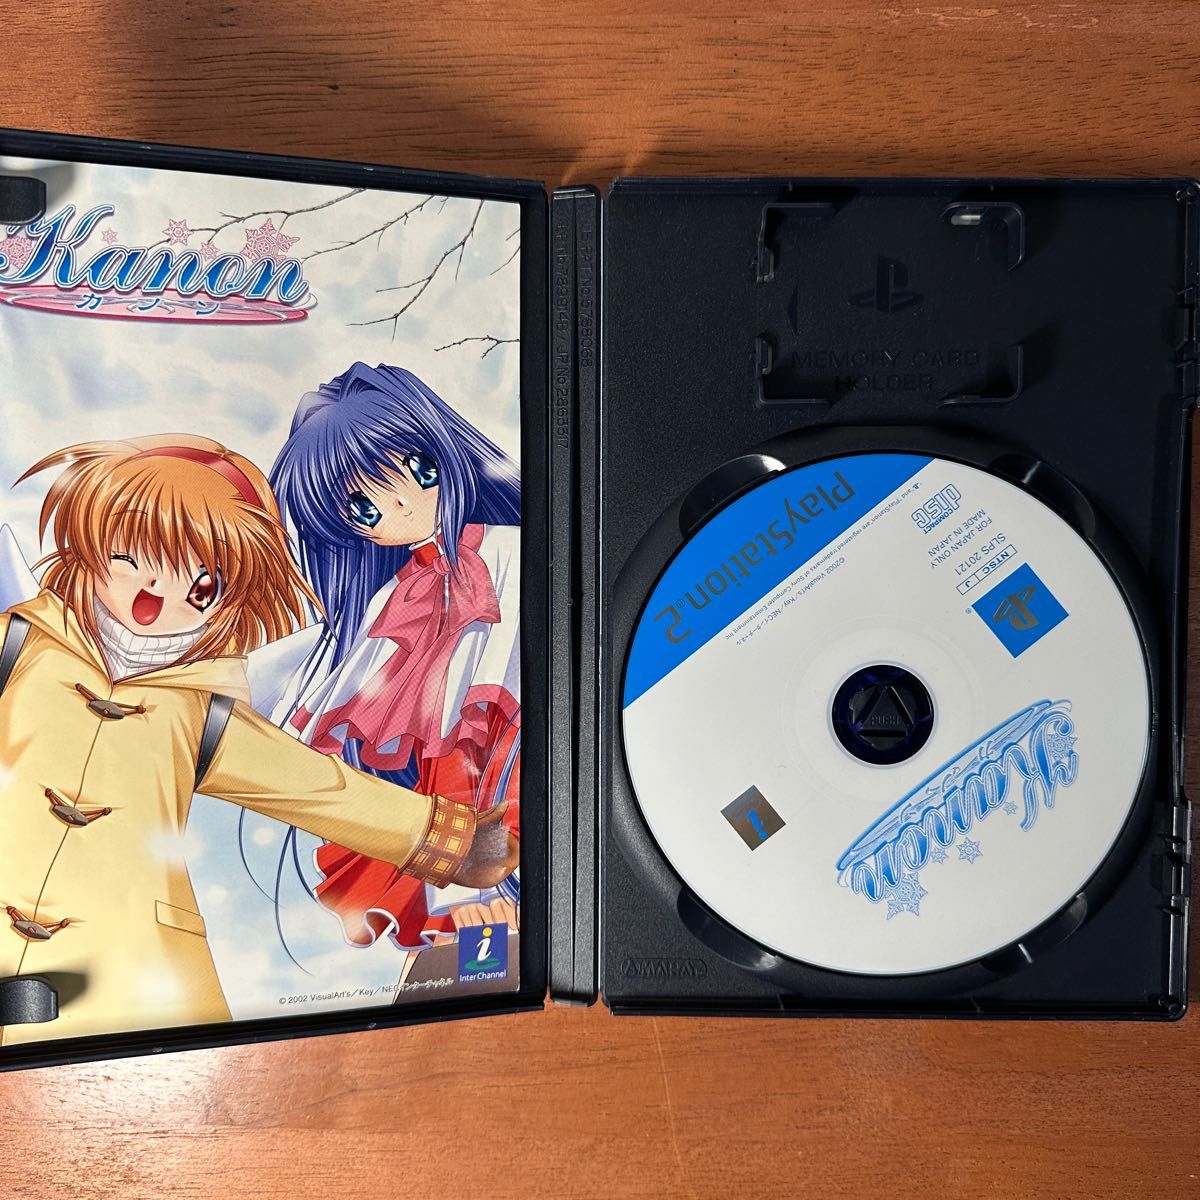 Key作品シリーズ Kanon Air Clannad他 PS2ソフトまとめ販売